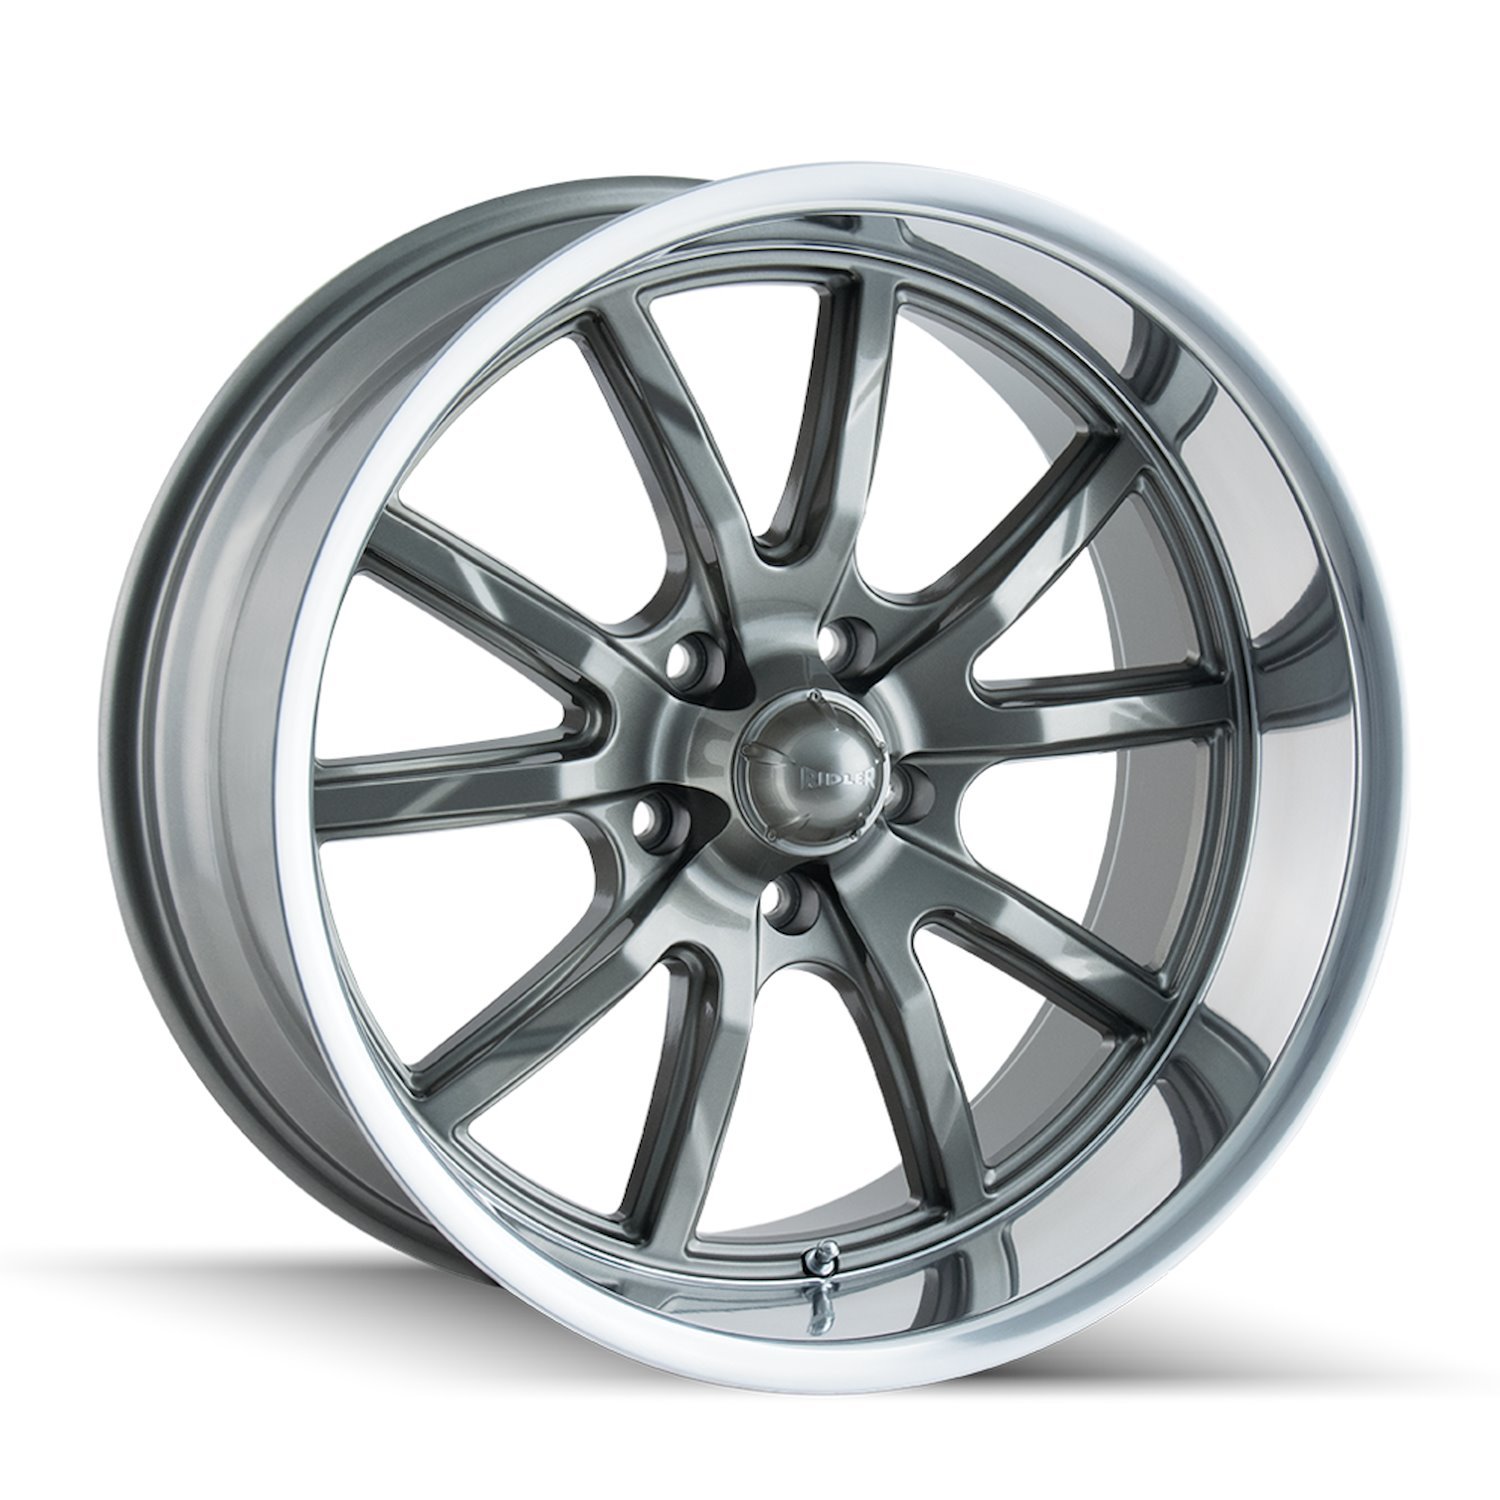 650-5773G 650-Series Wheel [Size: 15" x 7"] Gloss Grey Polished Finish